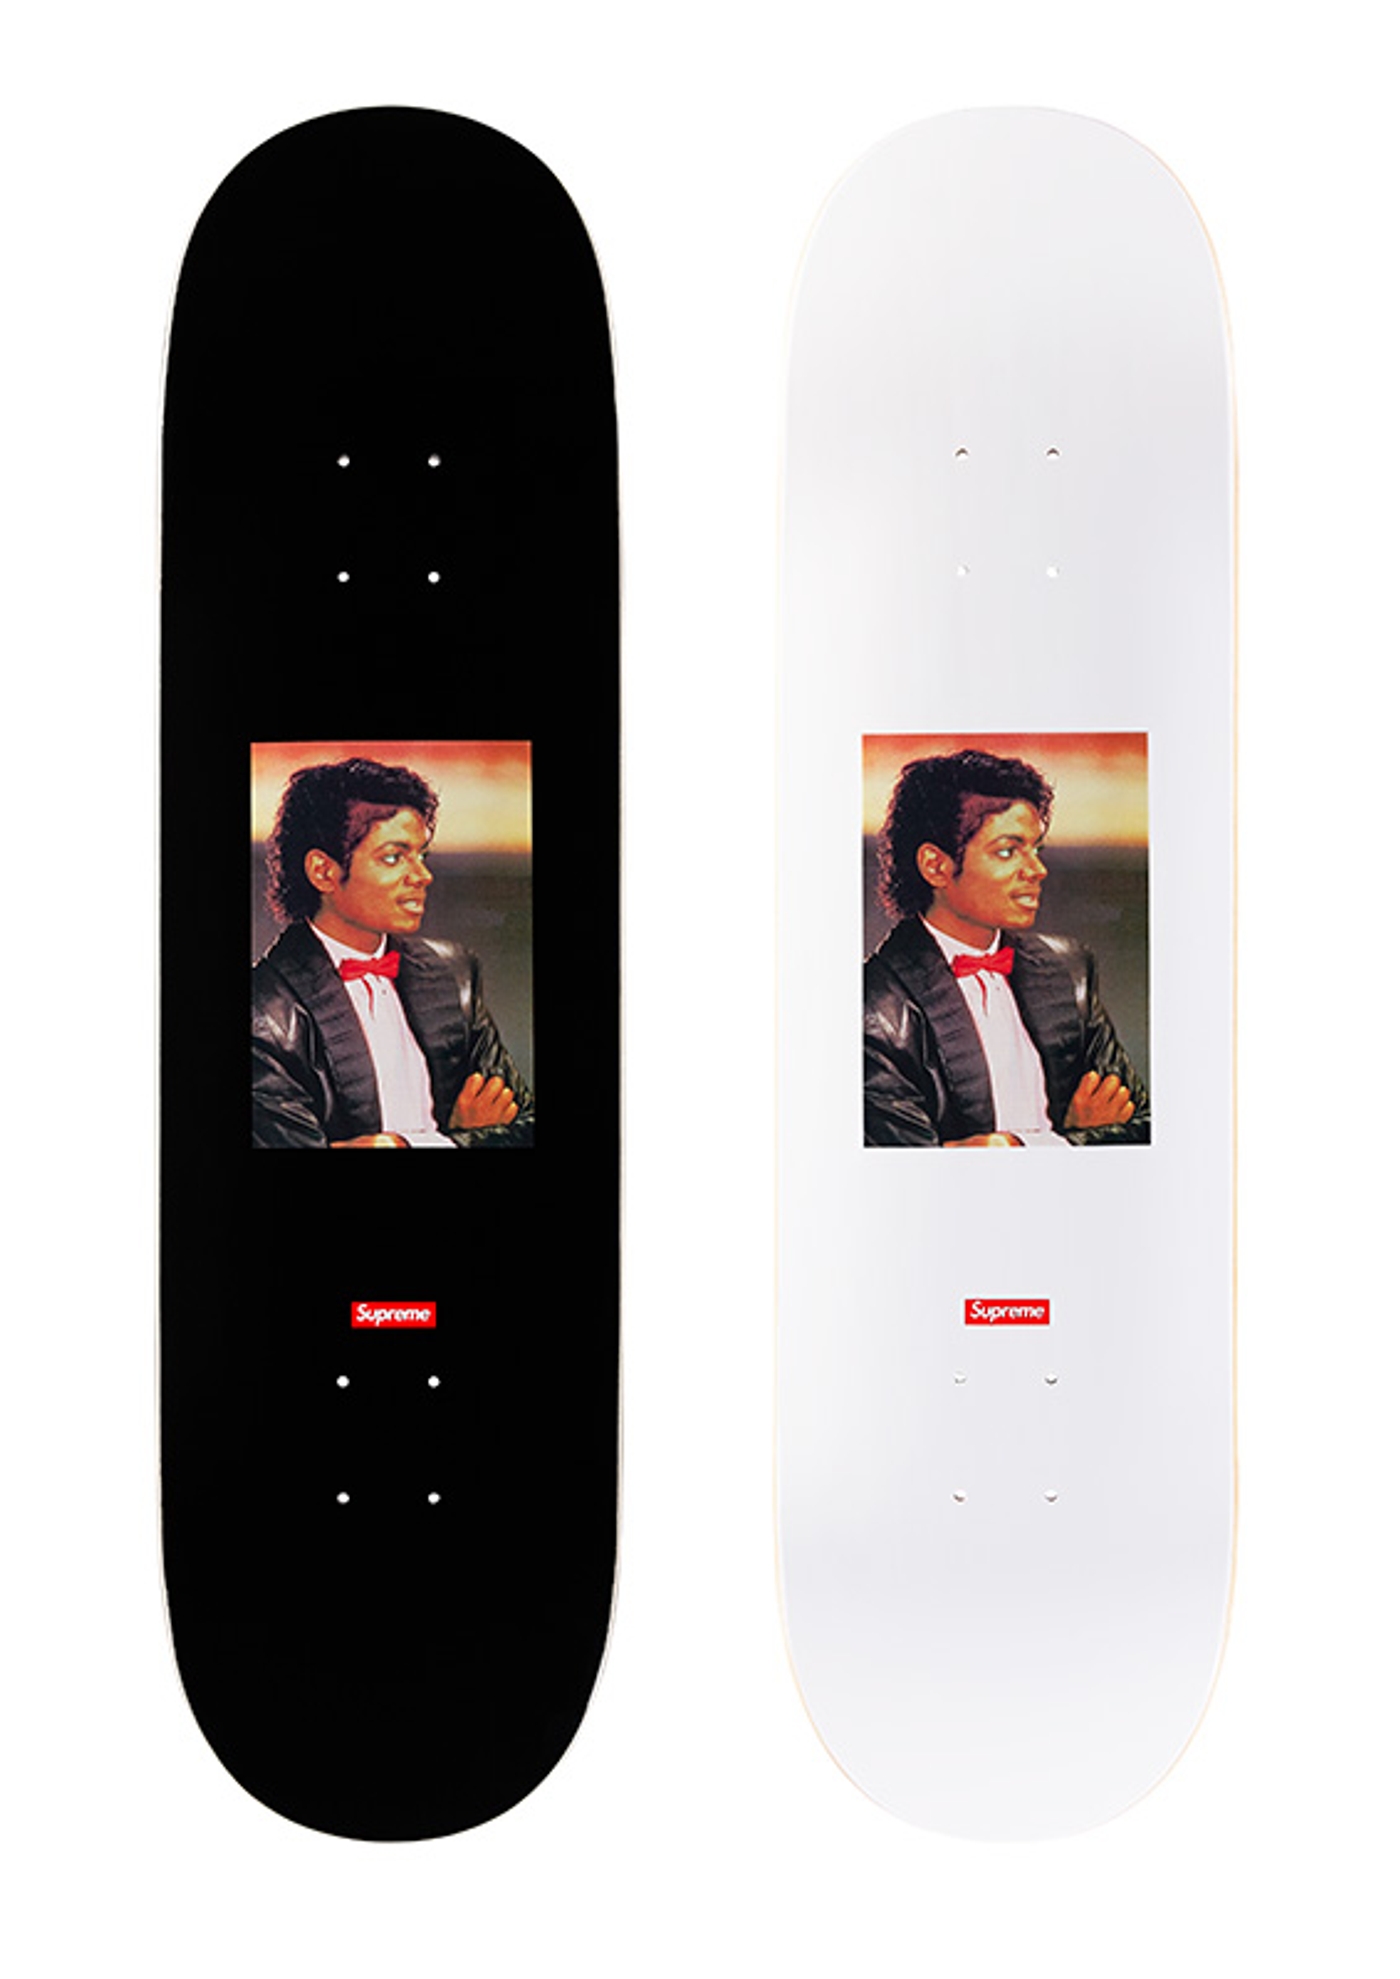 Michael Jackson Skateboard (10/10)